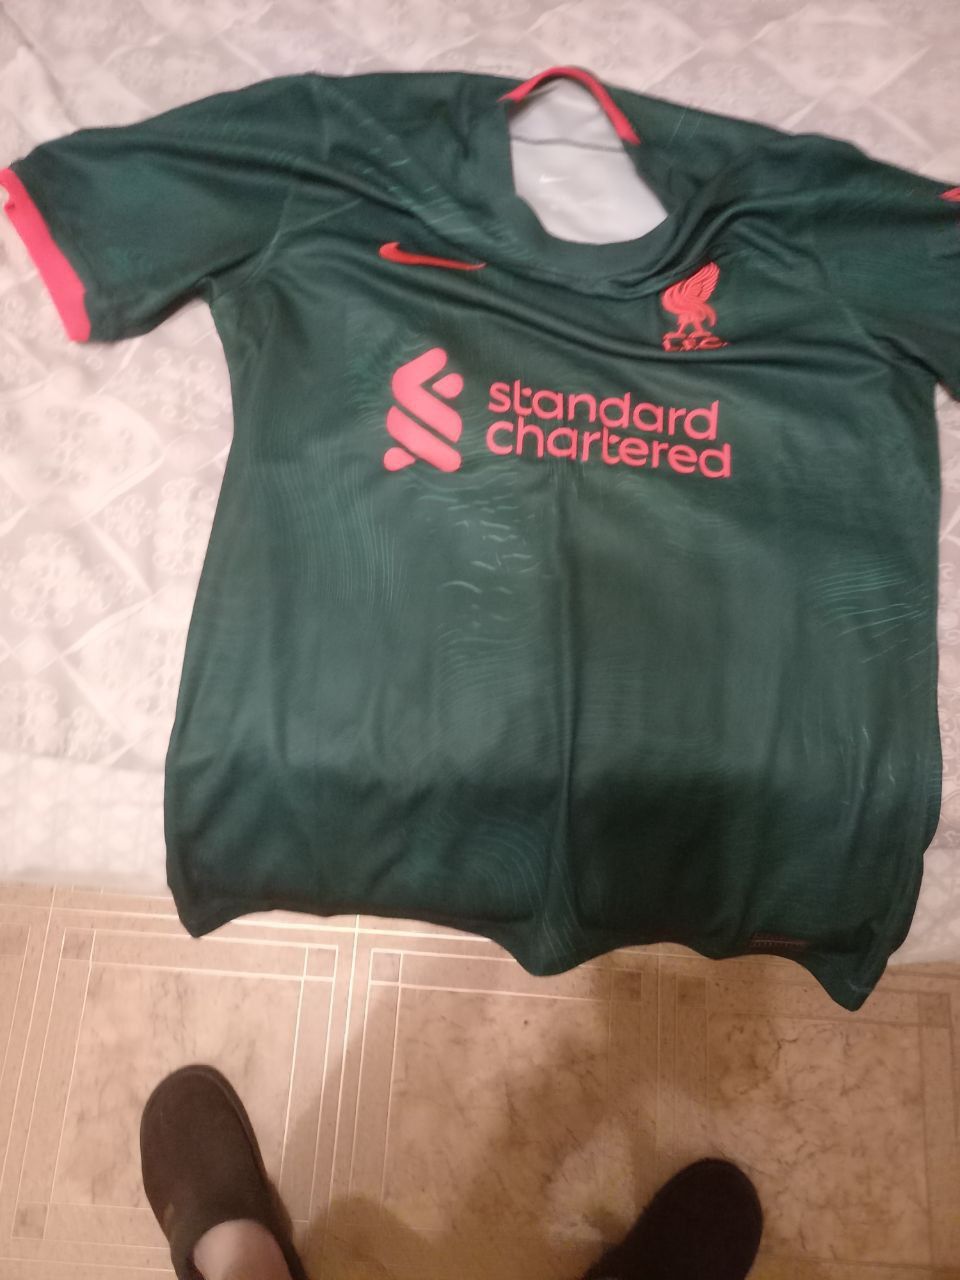 Футболка Nike Liverpool Standard Chartered